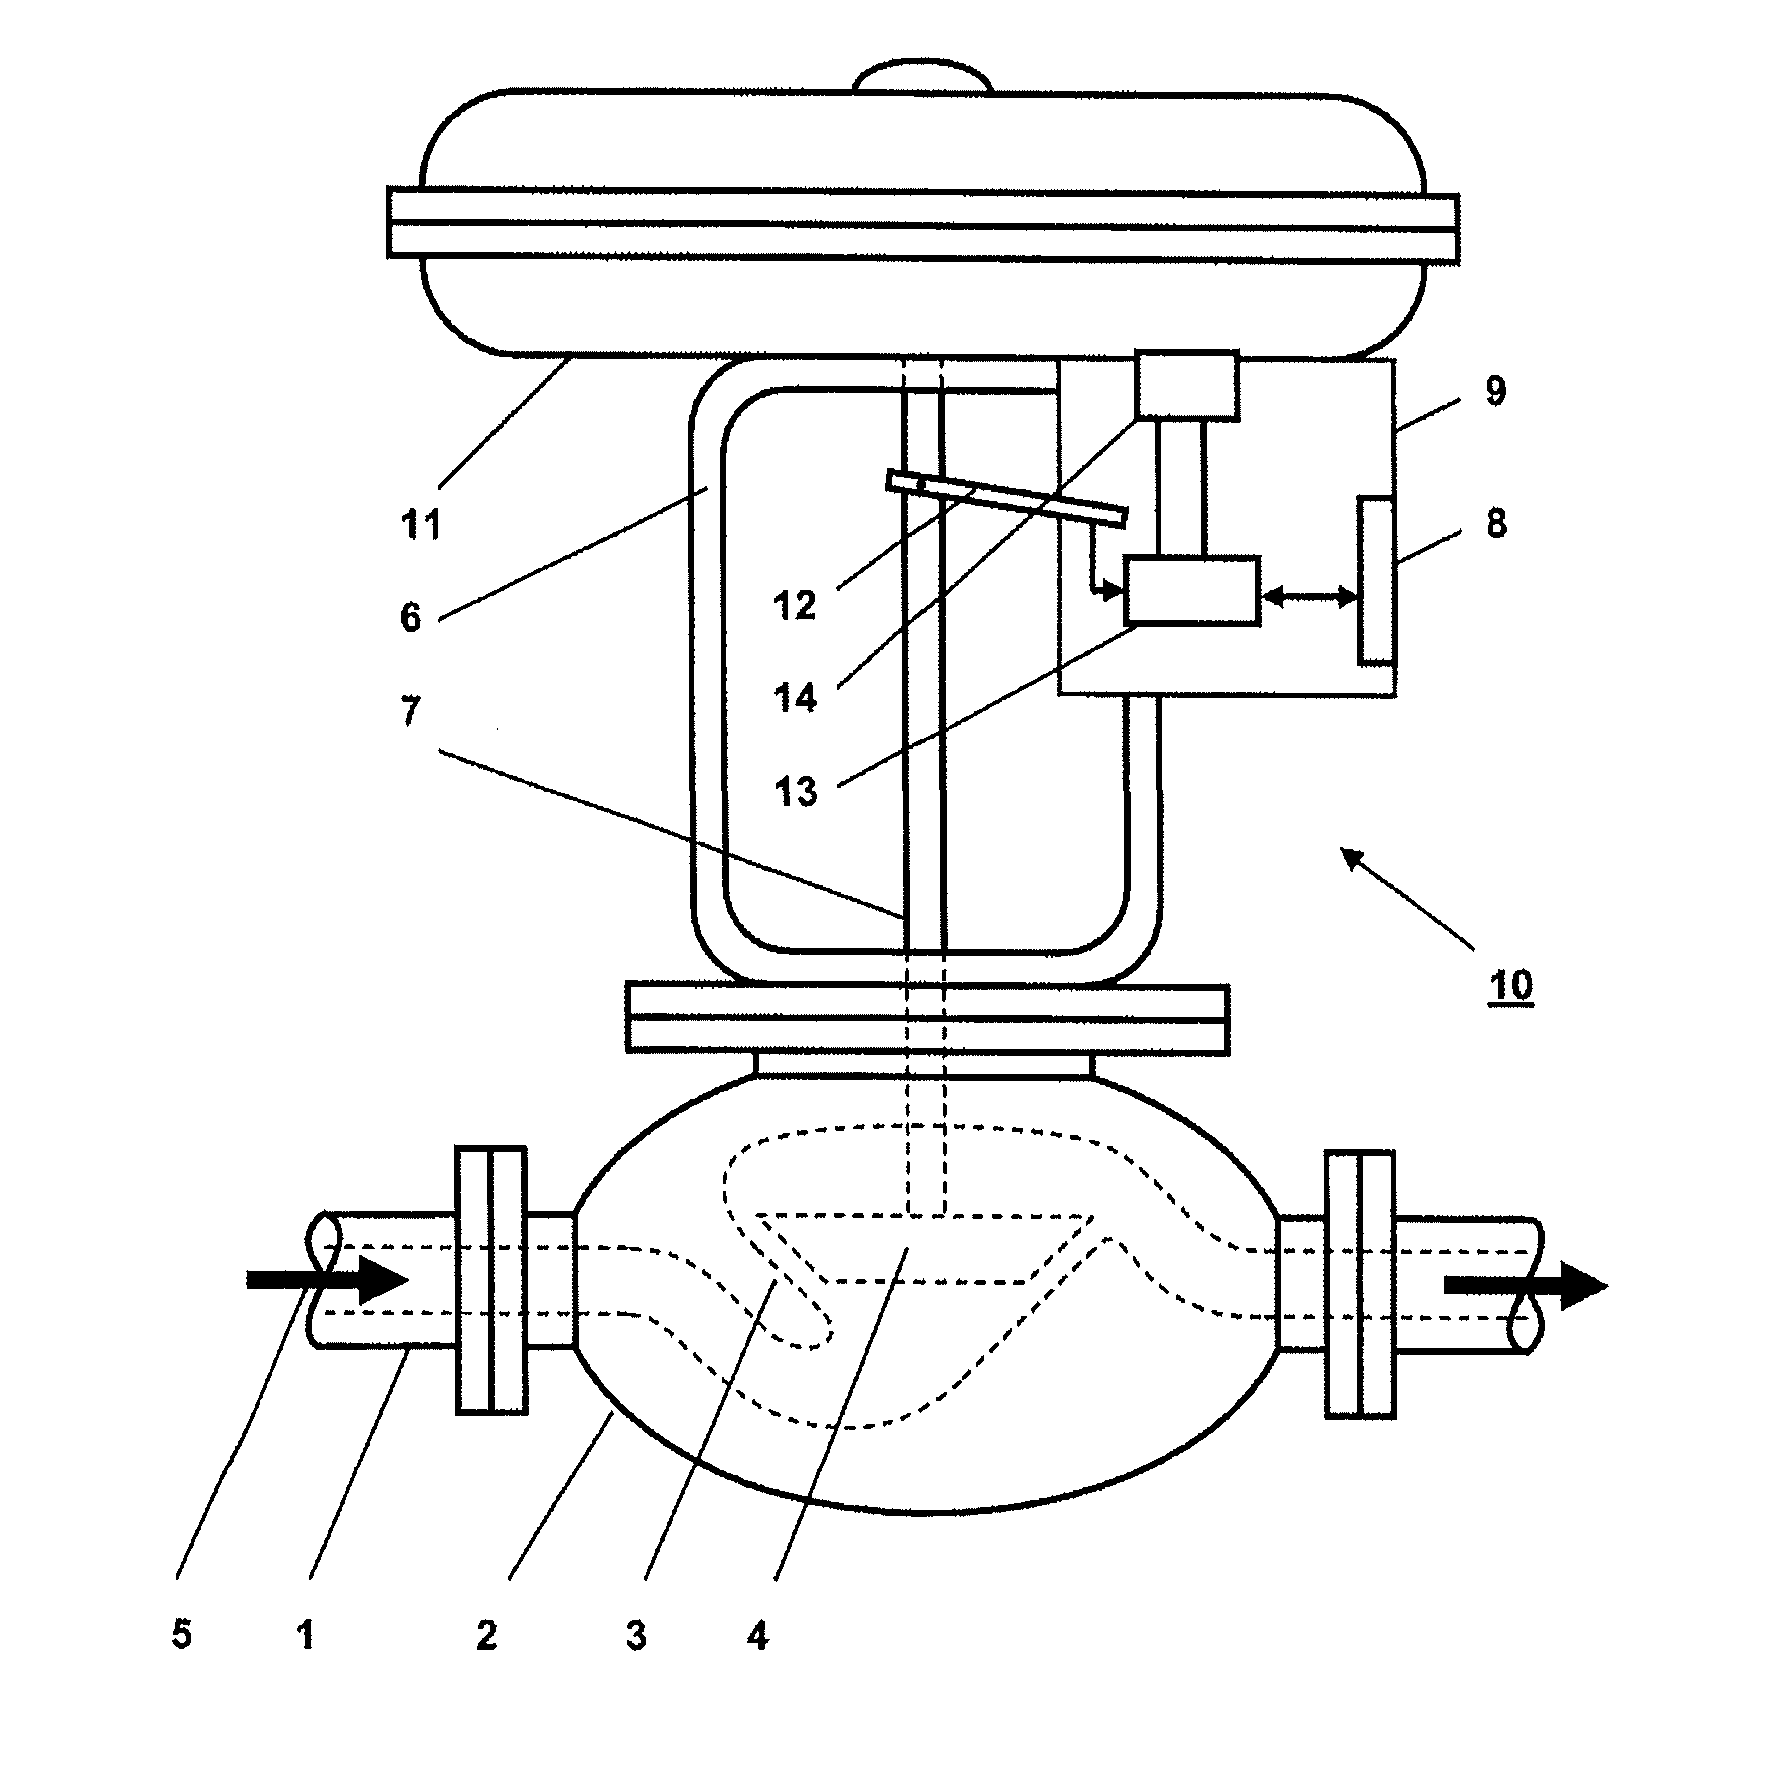 Electronic wear state determination in a valve arrangement